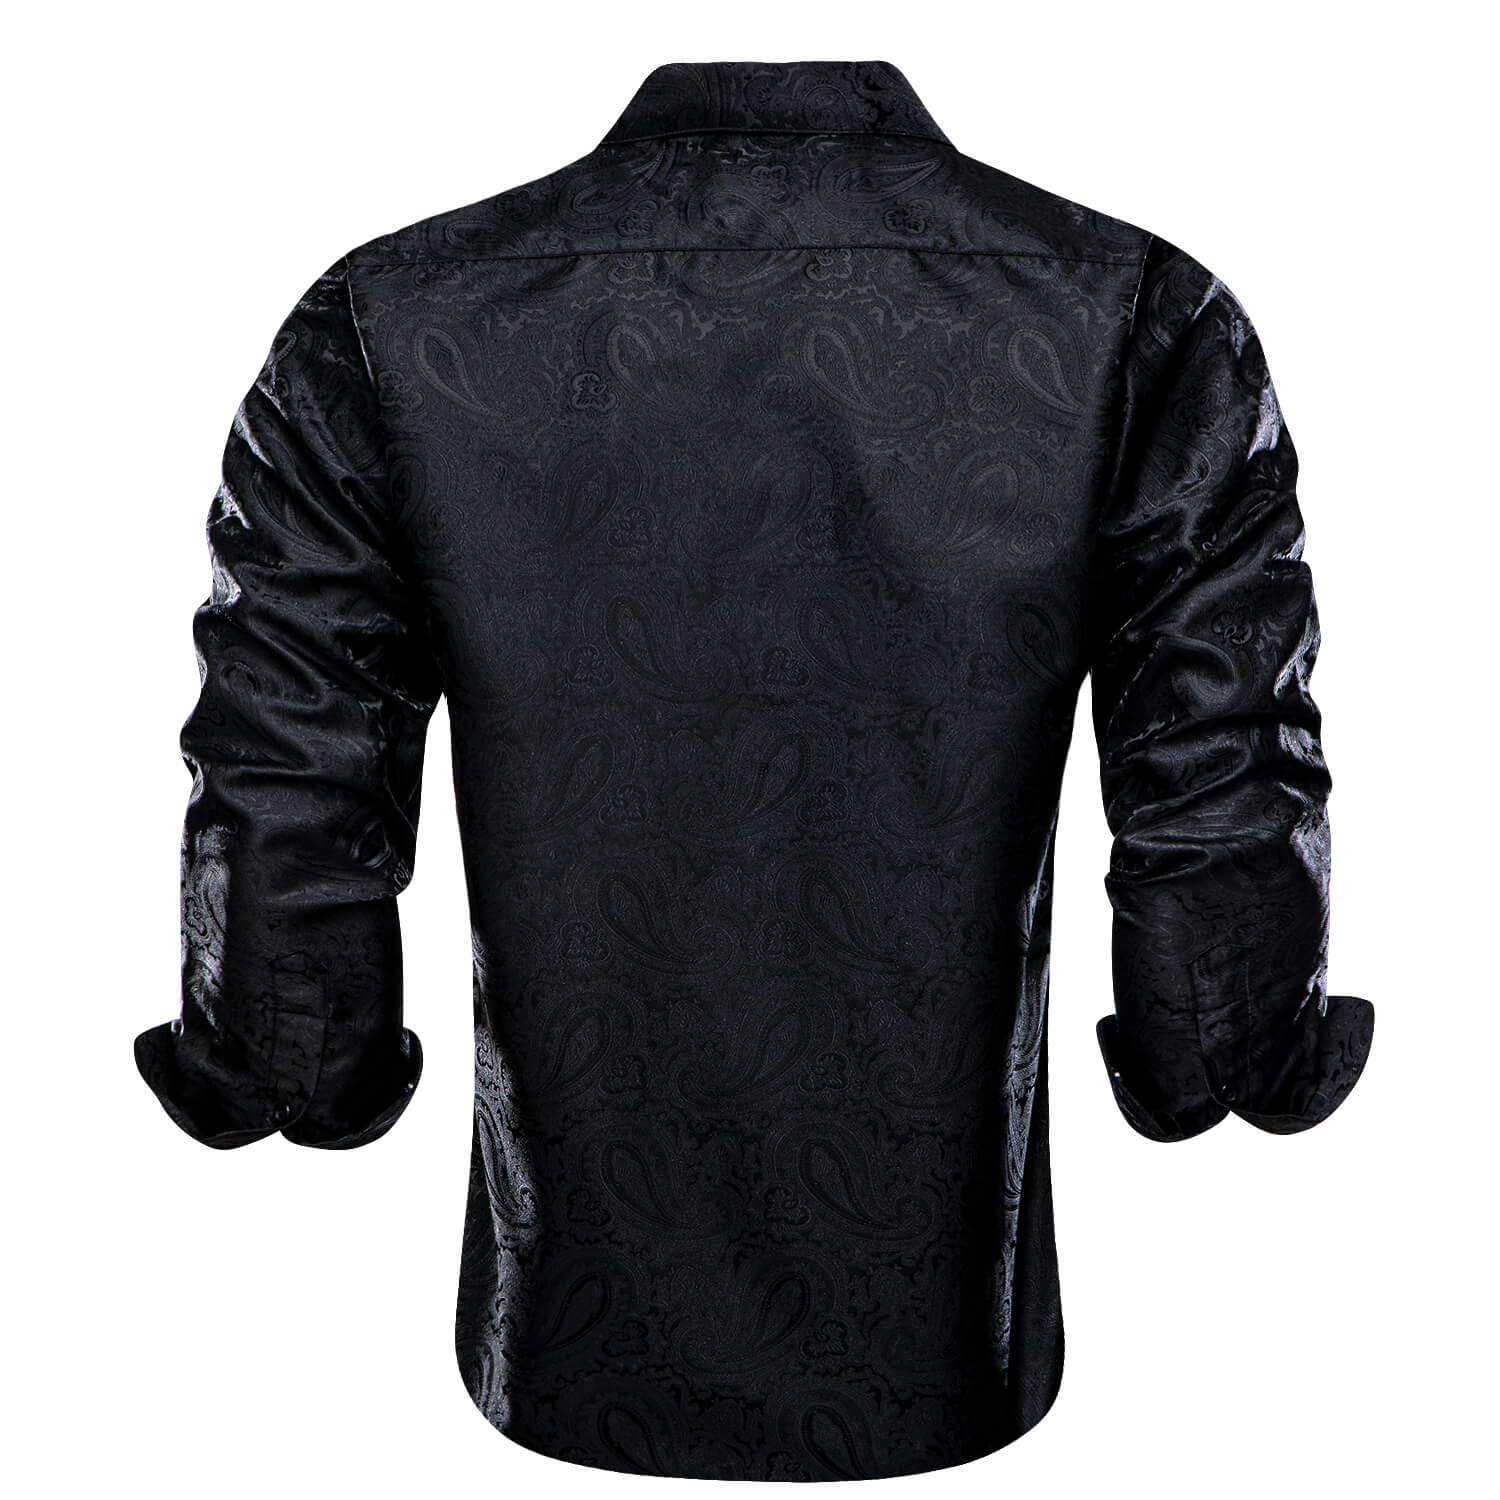 Hi-Tie Button Down Shirt Black Paisley Silk Men's Long Sleeve Shirt